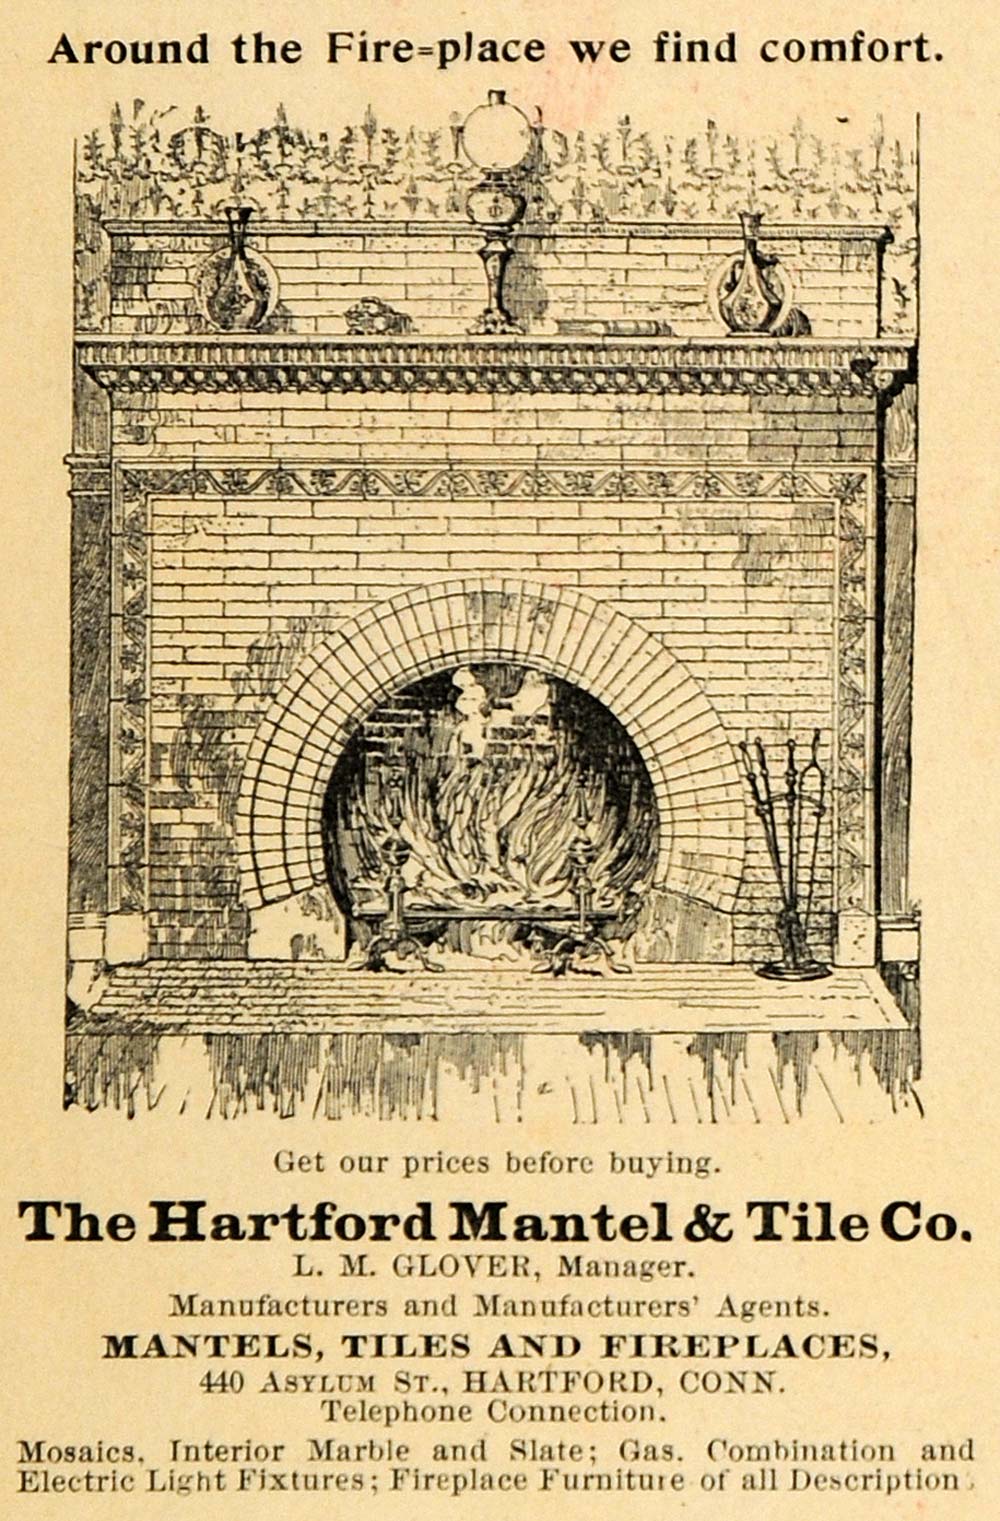 1899 Ad Hartford Mantel Tile Fireplaces LM Glover Lamp 440 Asylum St CM1